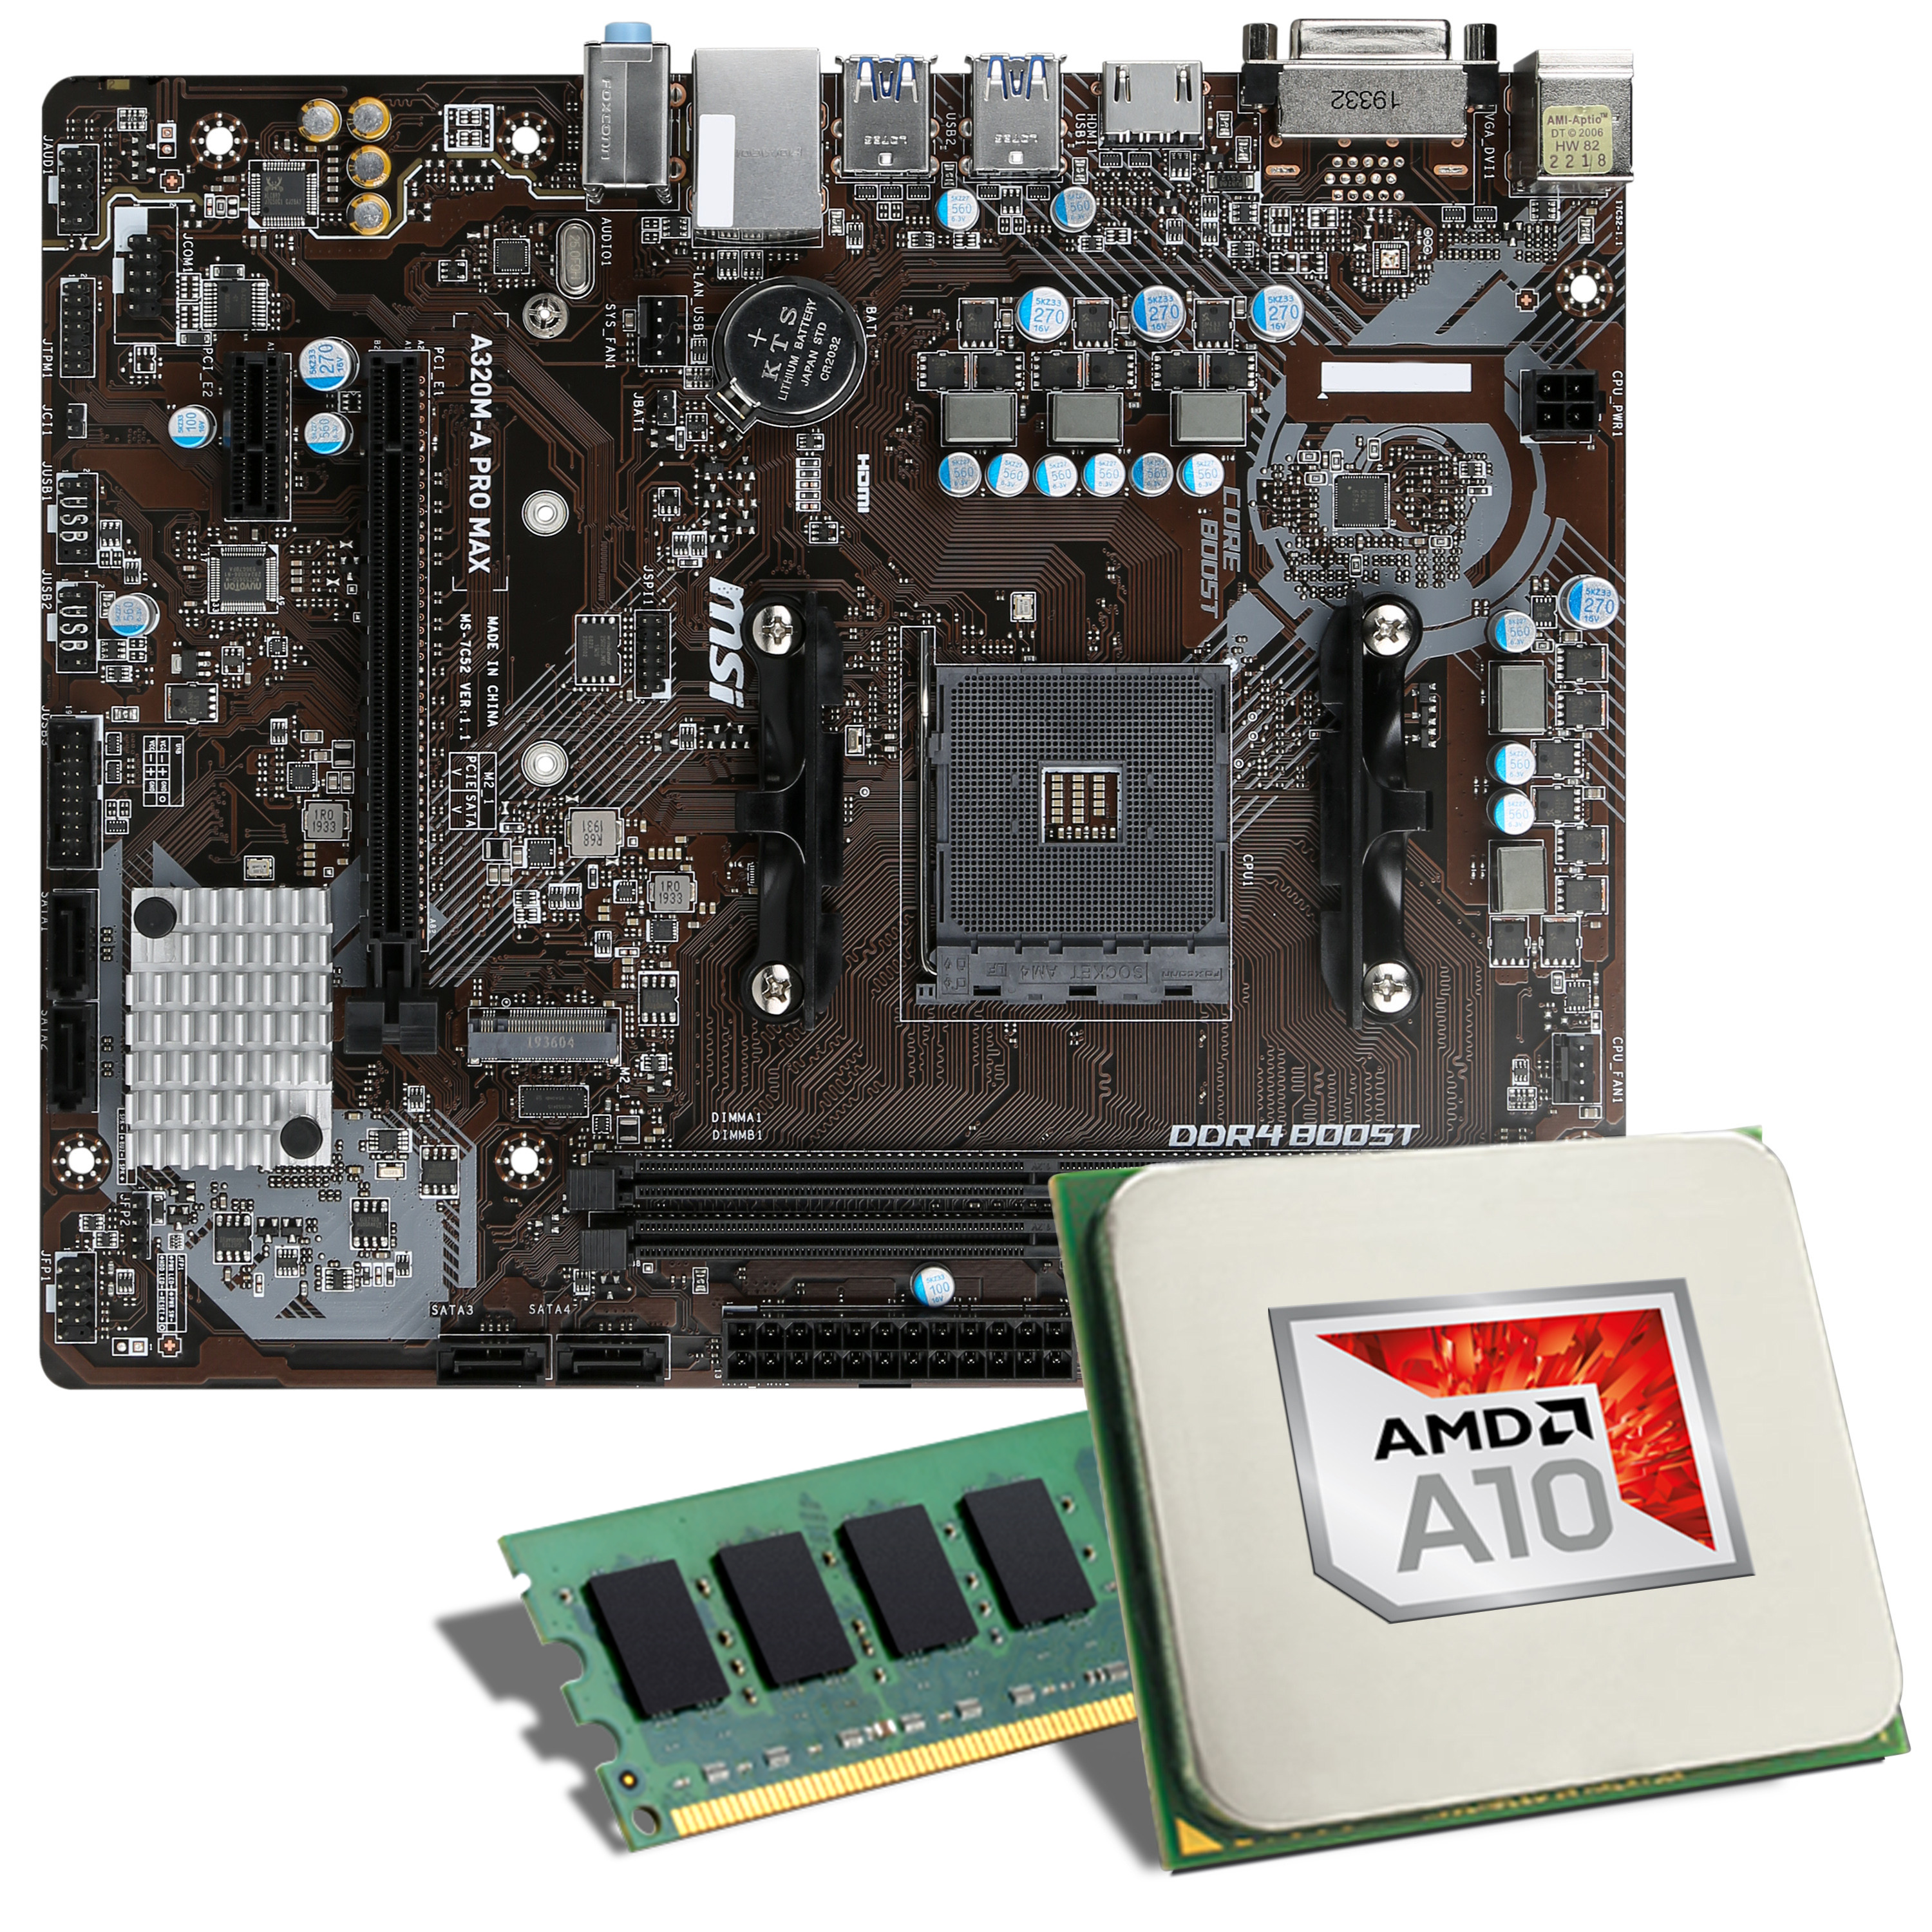 A10 9700 radeon r7. AMD a10-9700 Radeon r7, 10 Compute Cores 4c+6g 3.50 GHZ. AMD a8-9600 Radeon r7, 10 Compute Cores 4c+6g. AMD Radeon a8 9600. AMD a10-9700 Radeon r7, 10 Compute Cores 4c+6g.